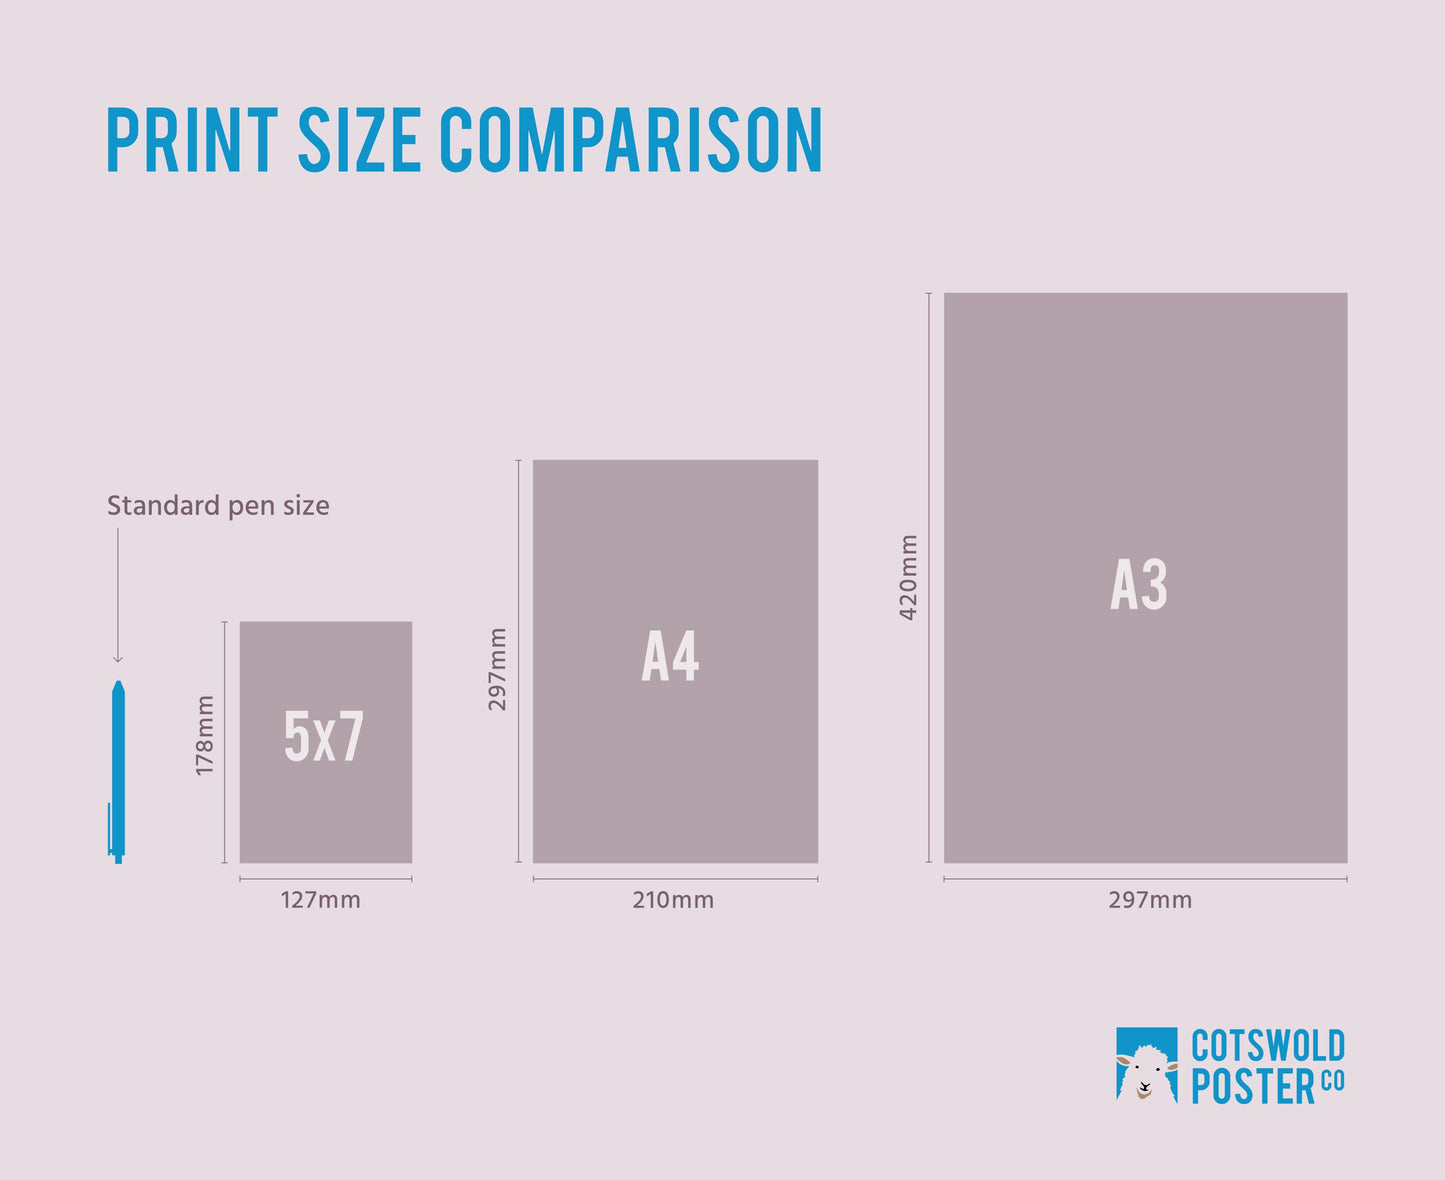 Art print size comparison graphic